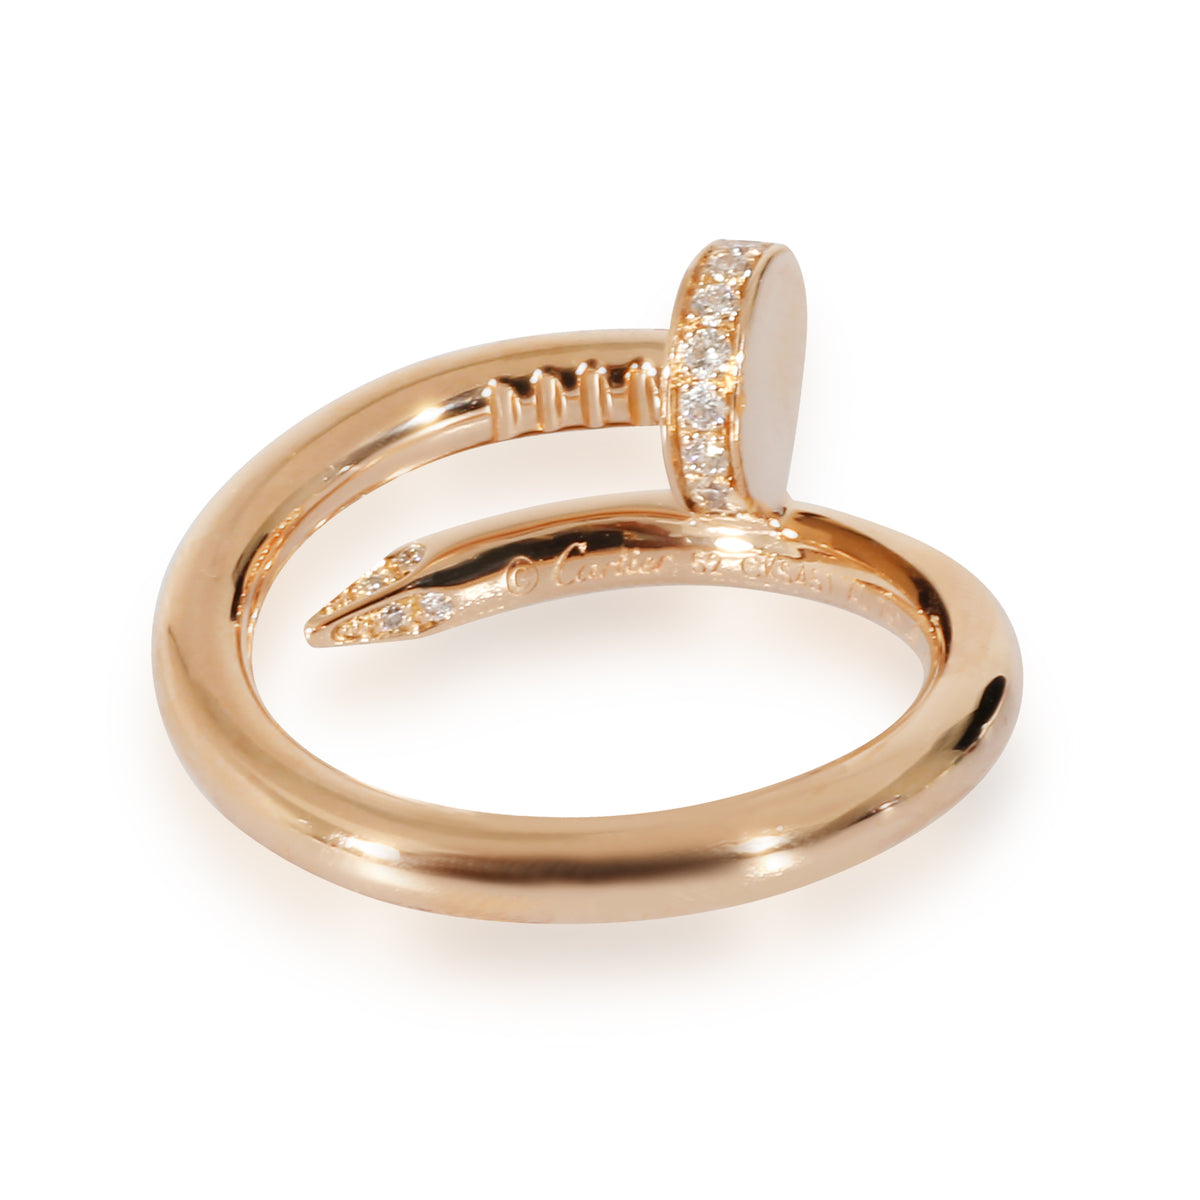 Cartier Juste un Clou Diamond Ring in 18K 18K Rose Gold 0.13 CTW